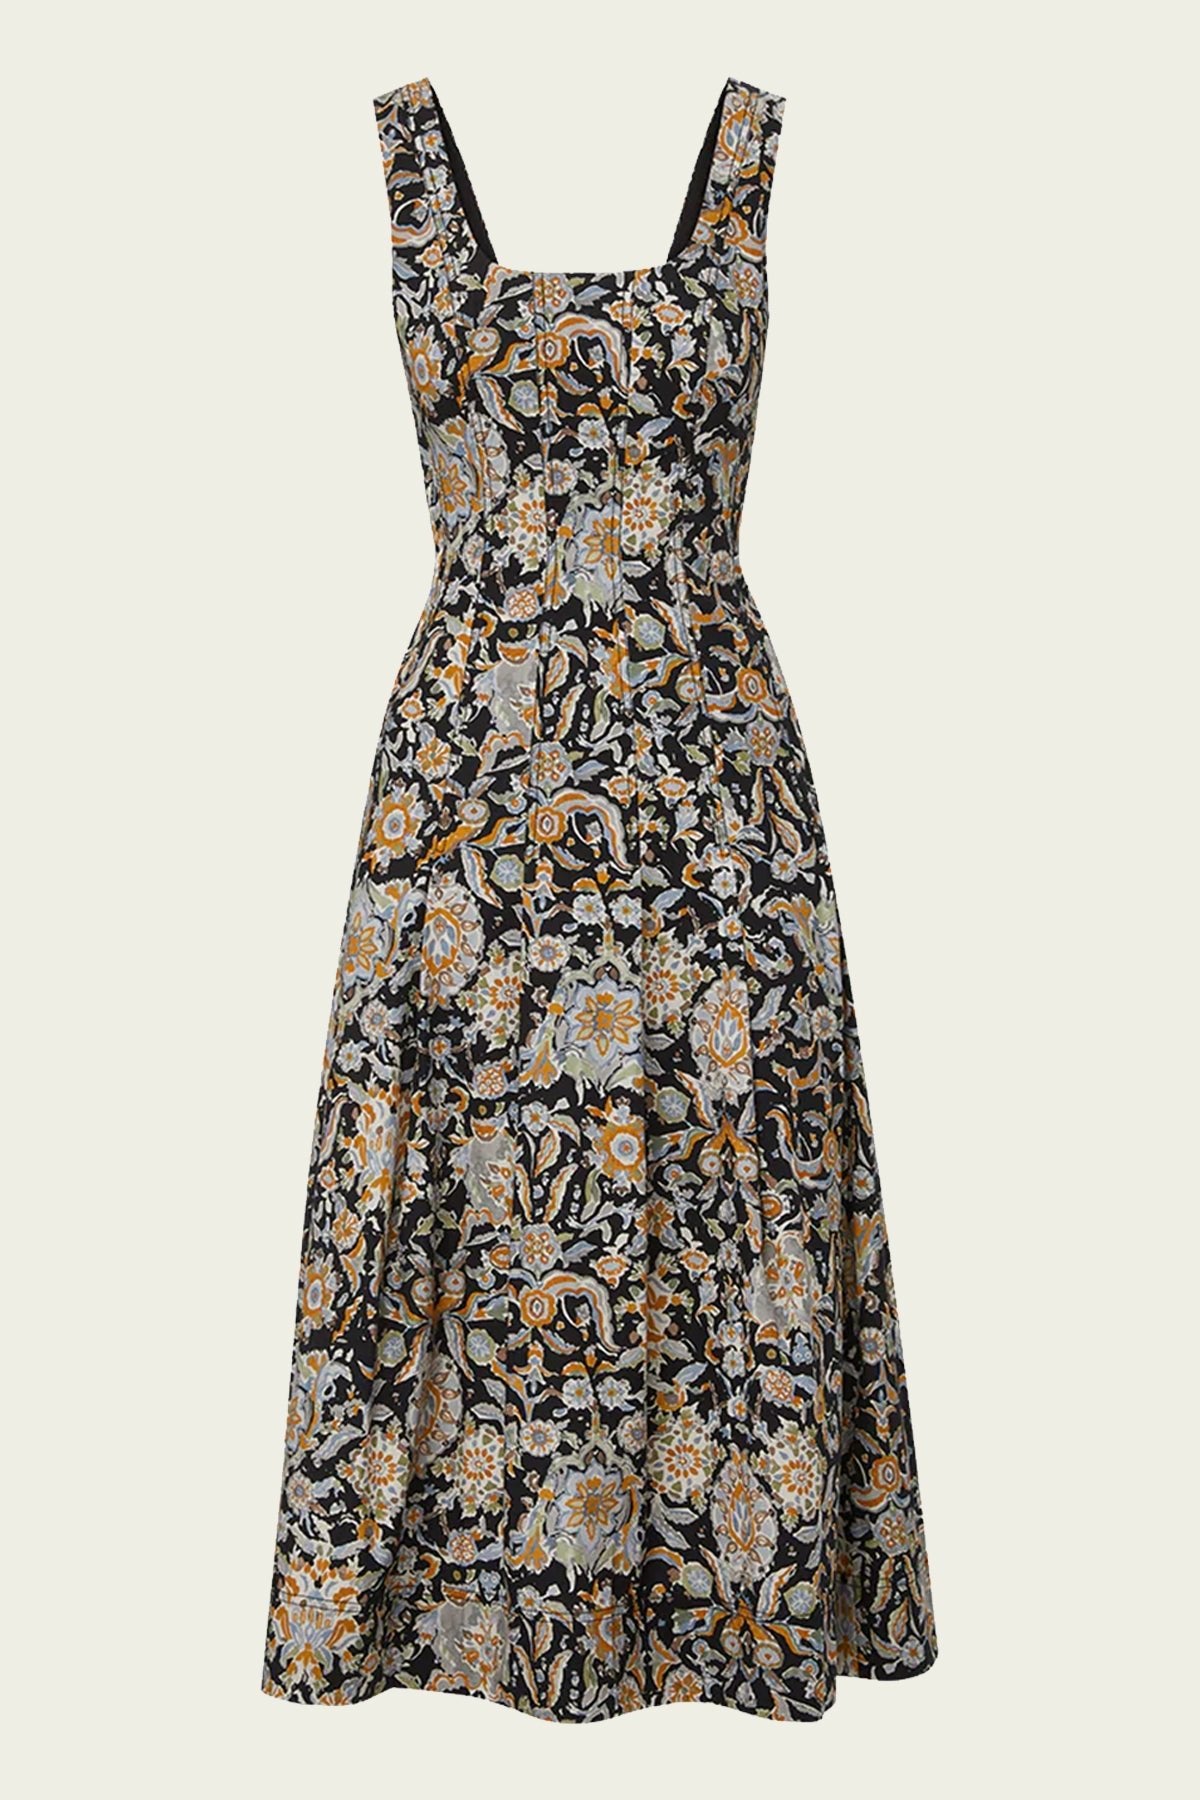 Jolie Paisley-Print Dress in Black Multi - shop-olivia.com